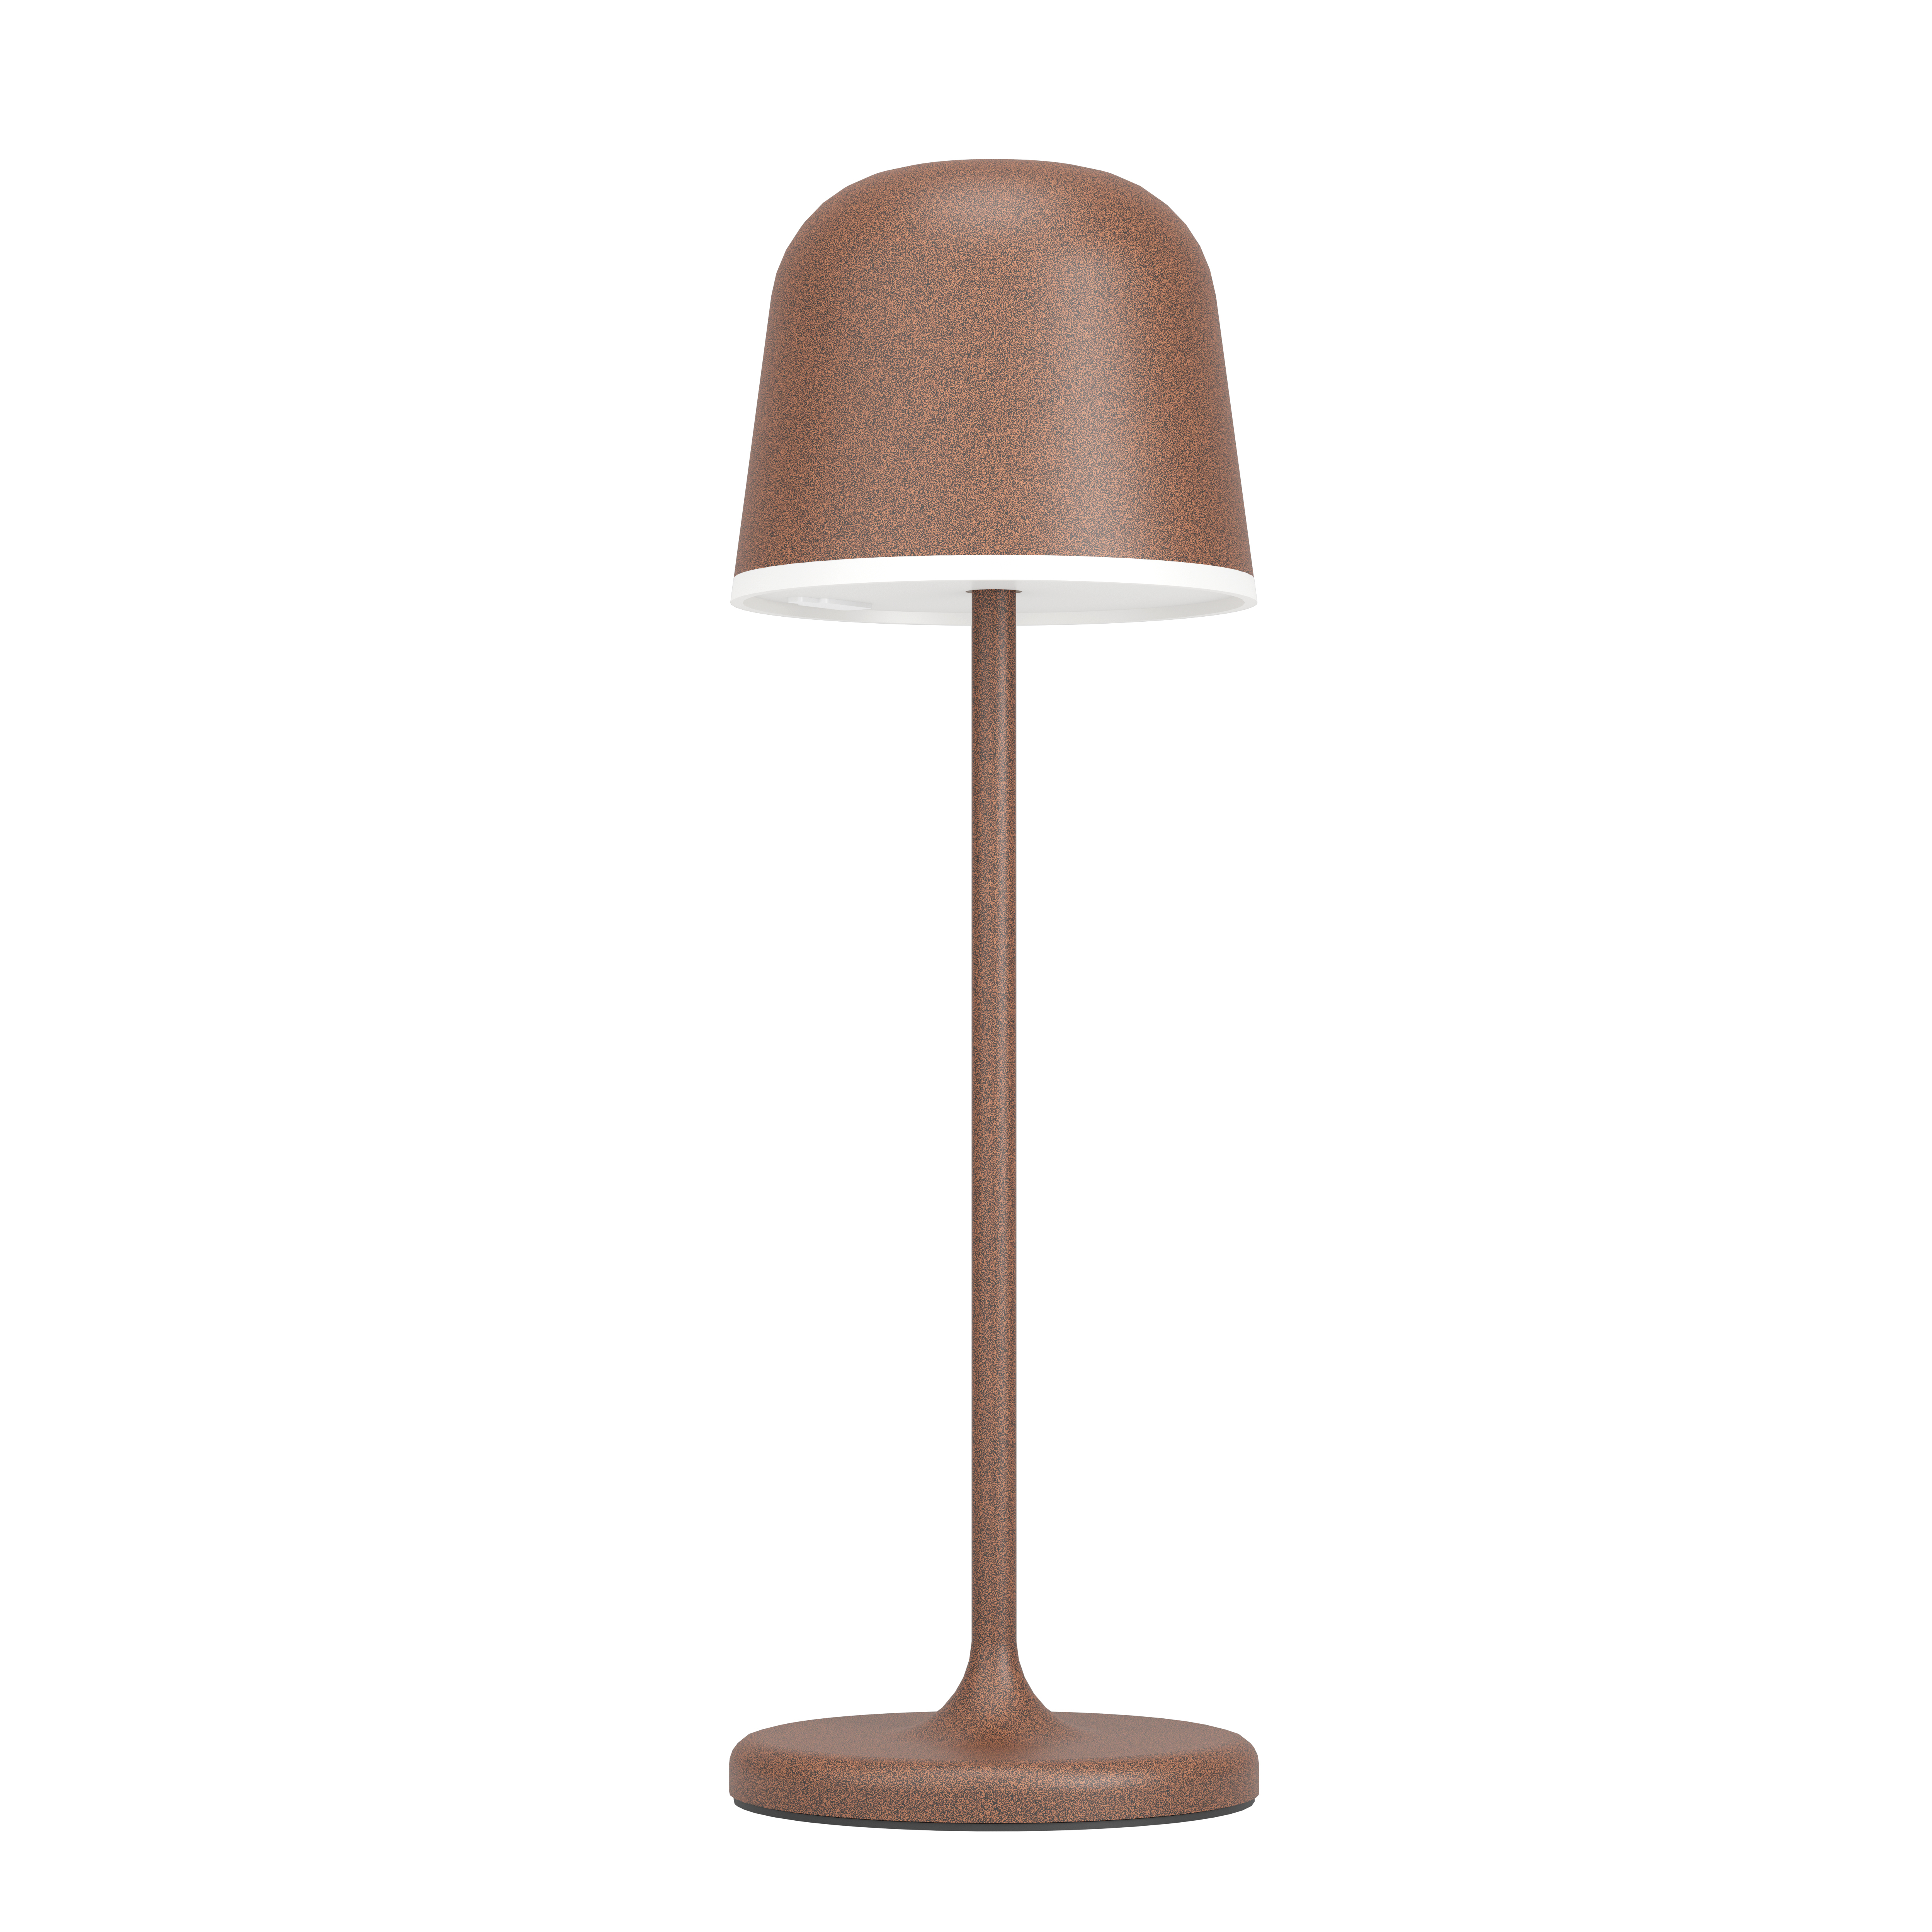 EGLO Lampe de table Mannera 900459 marron, batterie